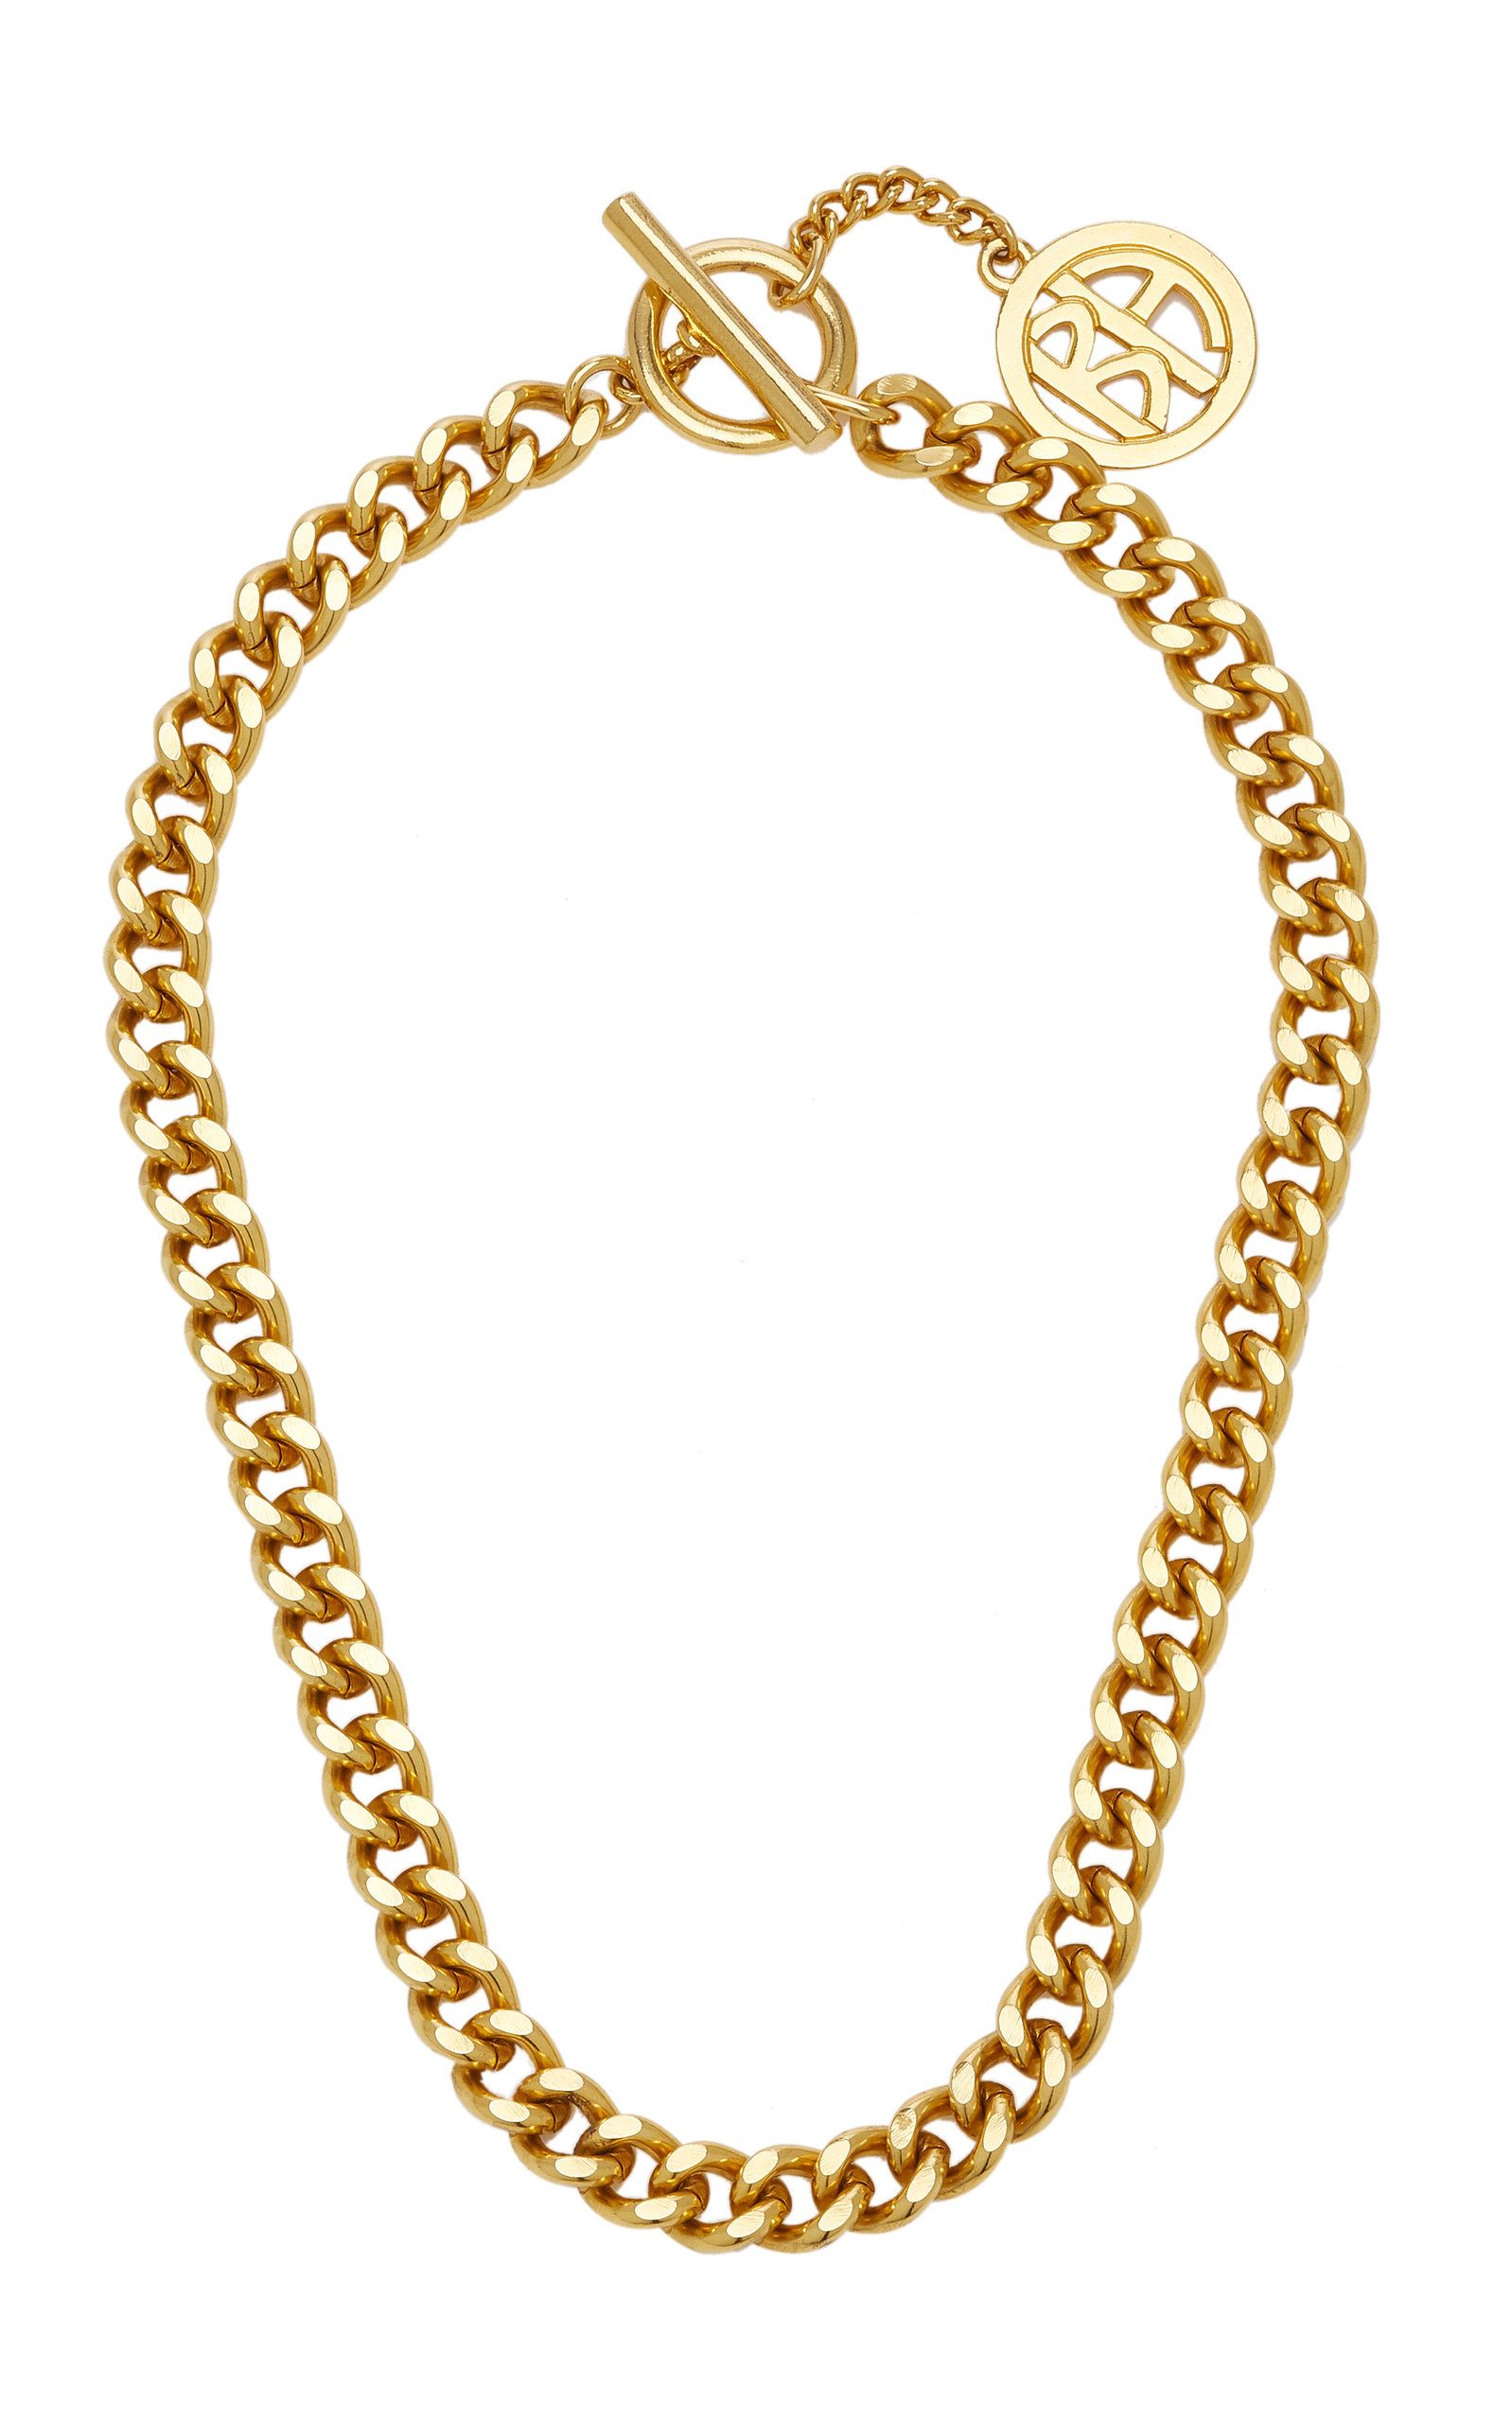 Ben-Amun - Women's 24K Gold-Plated Curb Chain Necklace - Gold - Moda Operandi - Gifts For Her | Moda Operandi (Global)